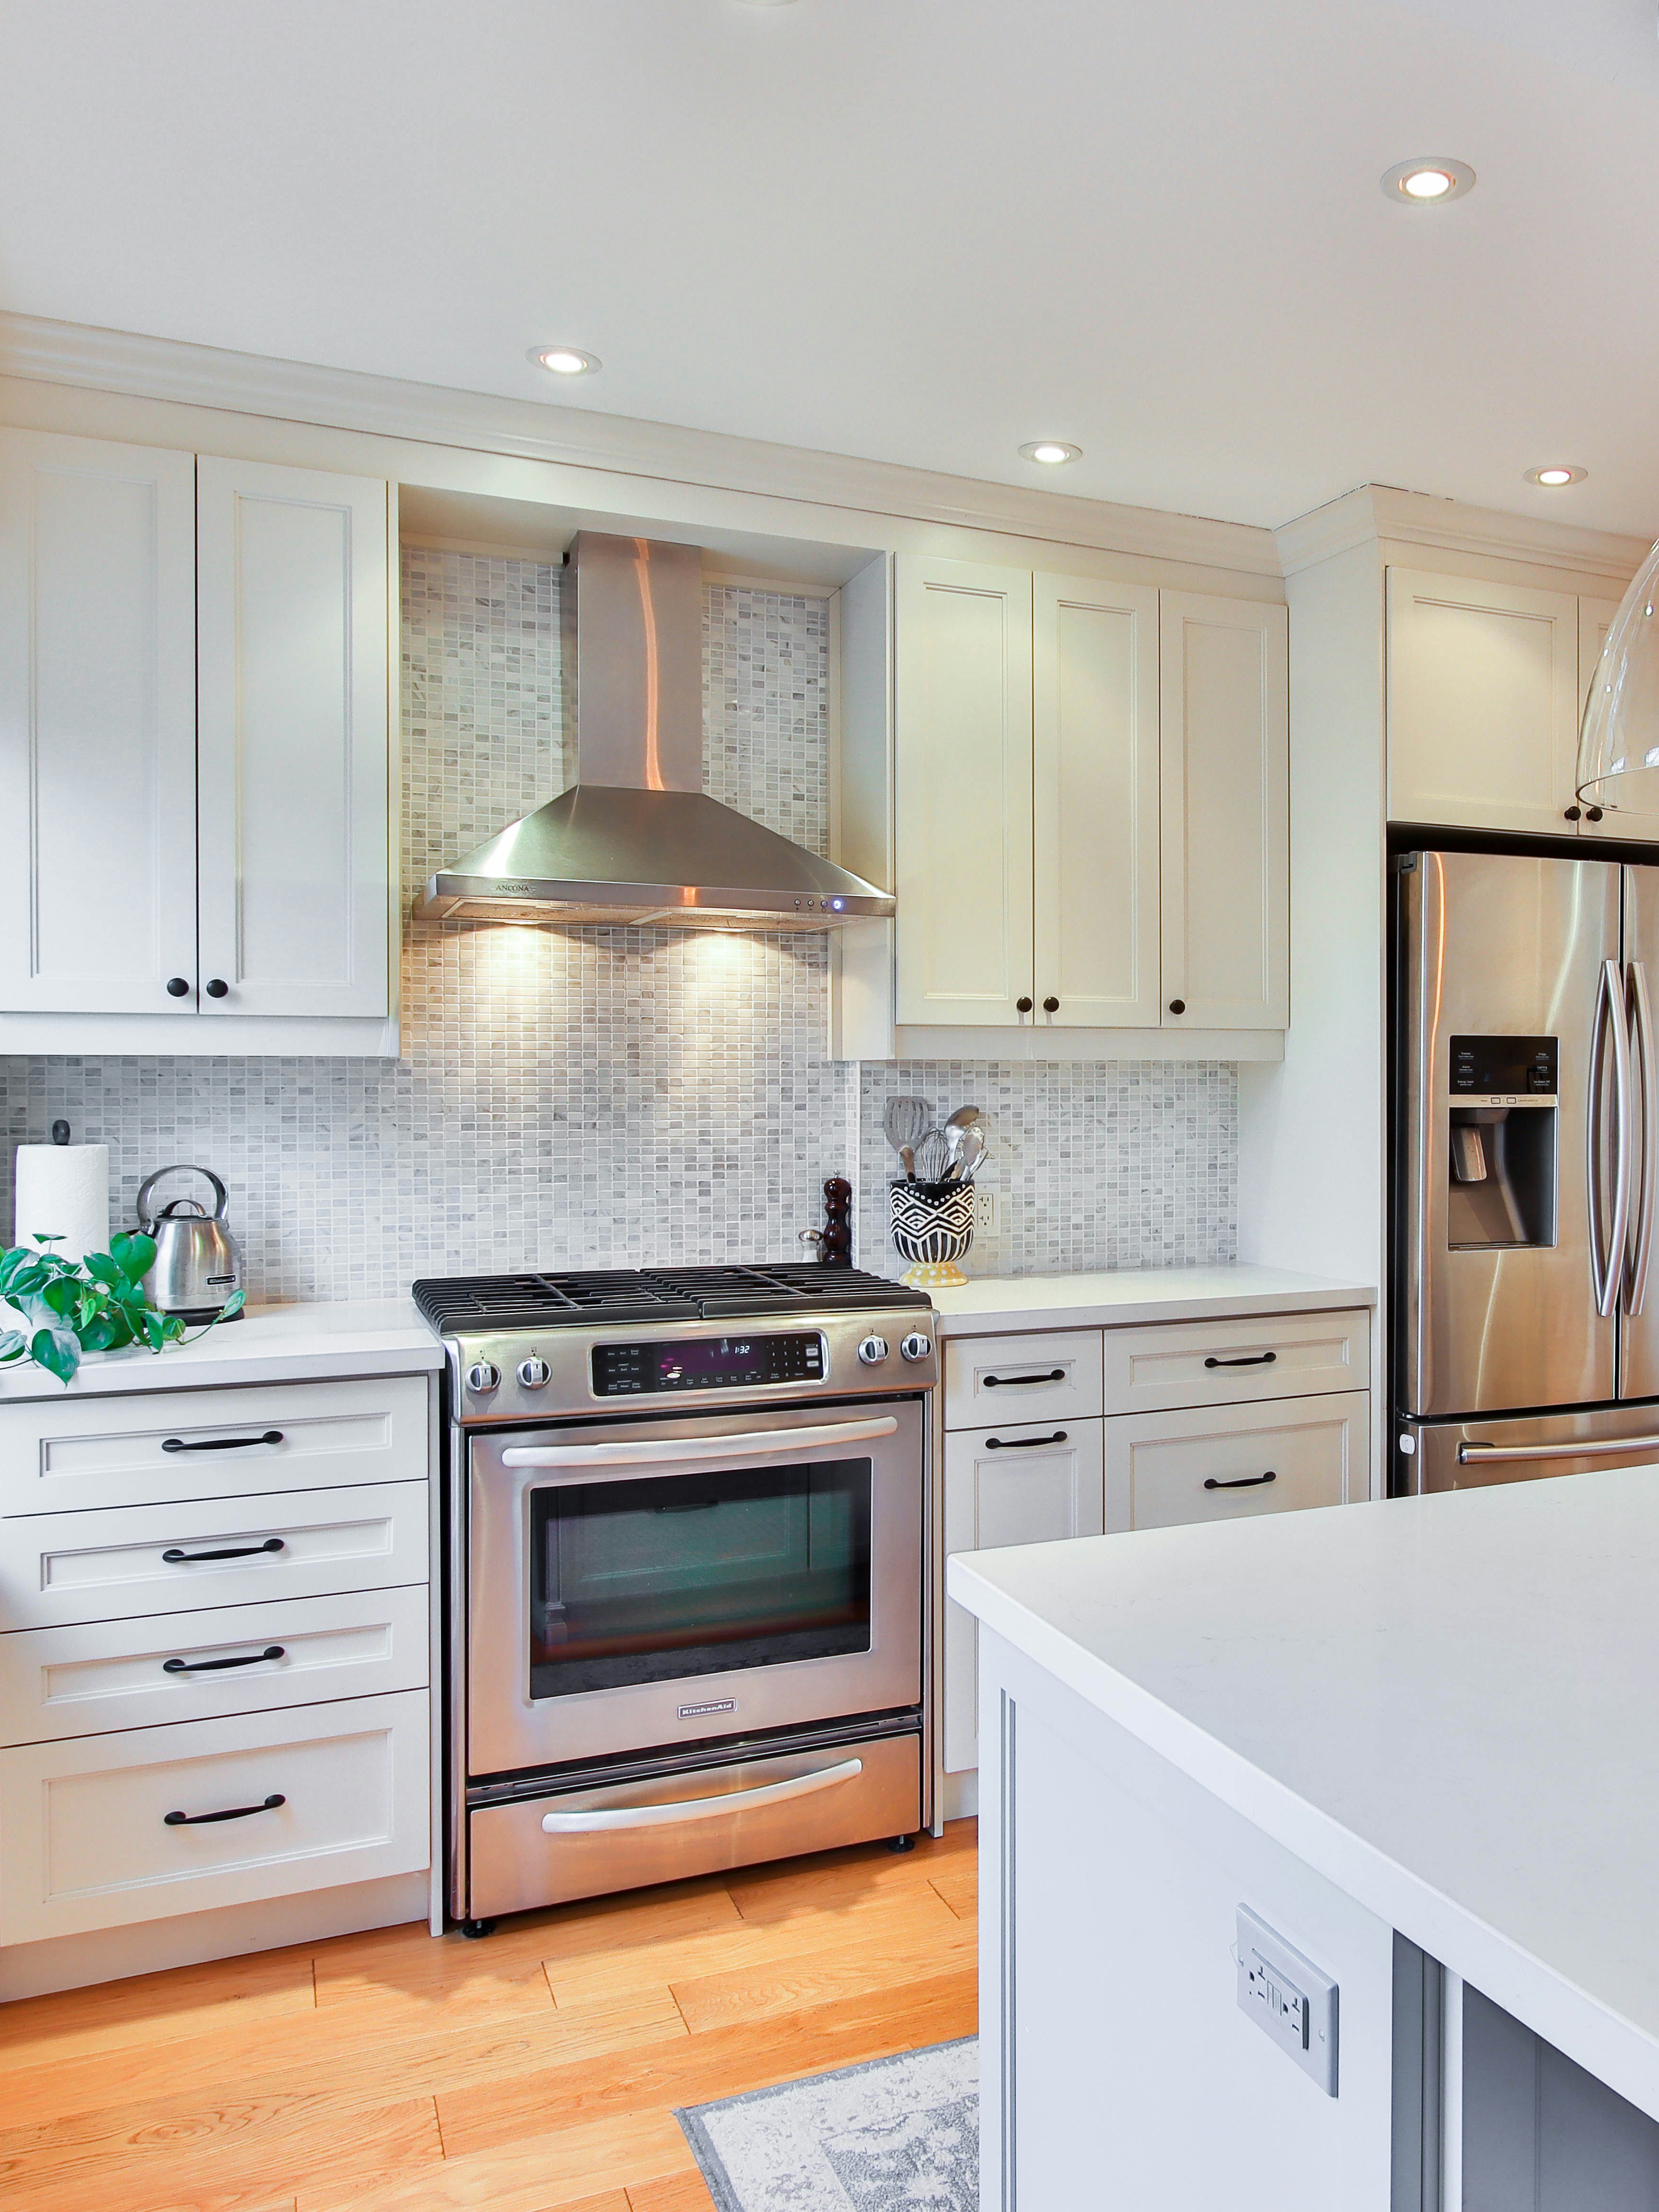 white wooden kitchen cabinet and white kitchen counter